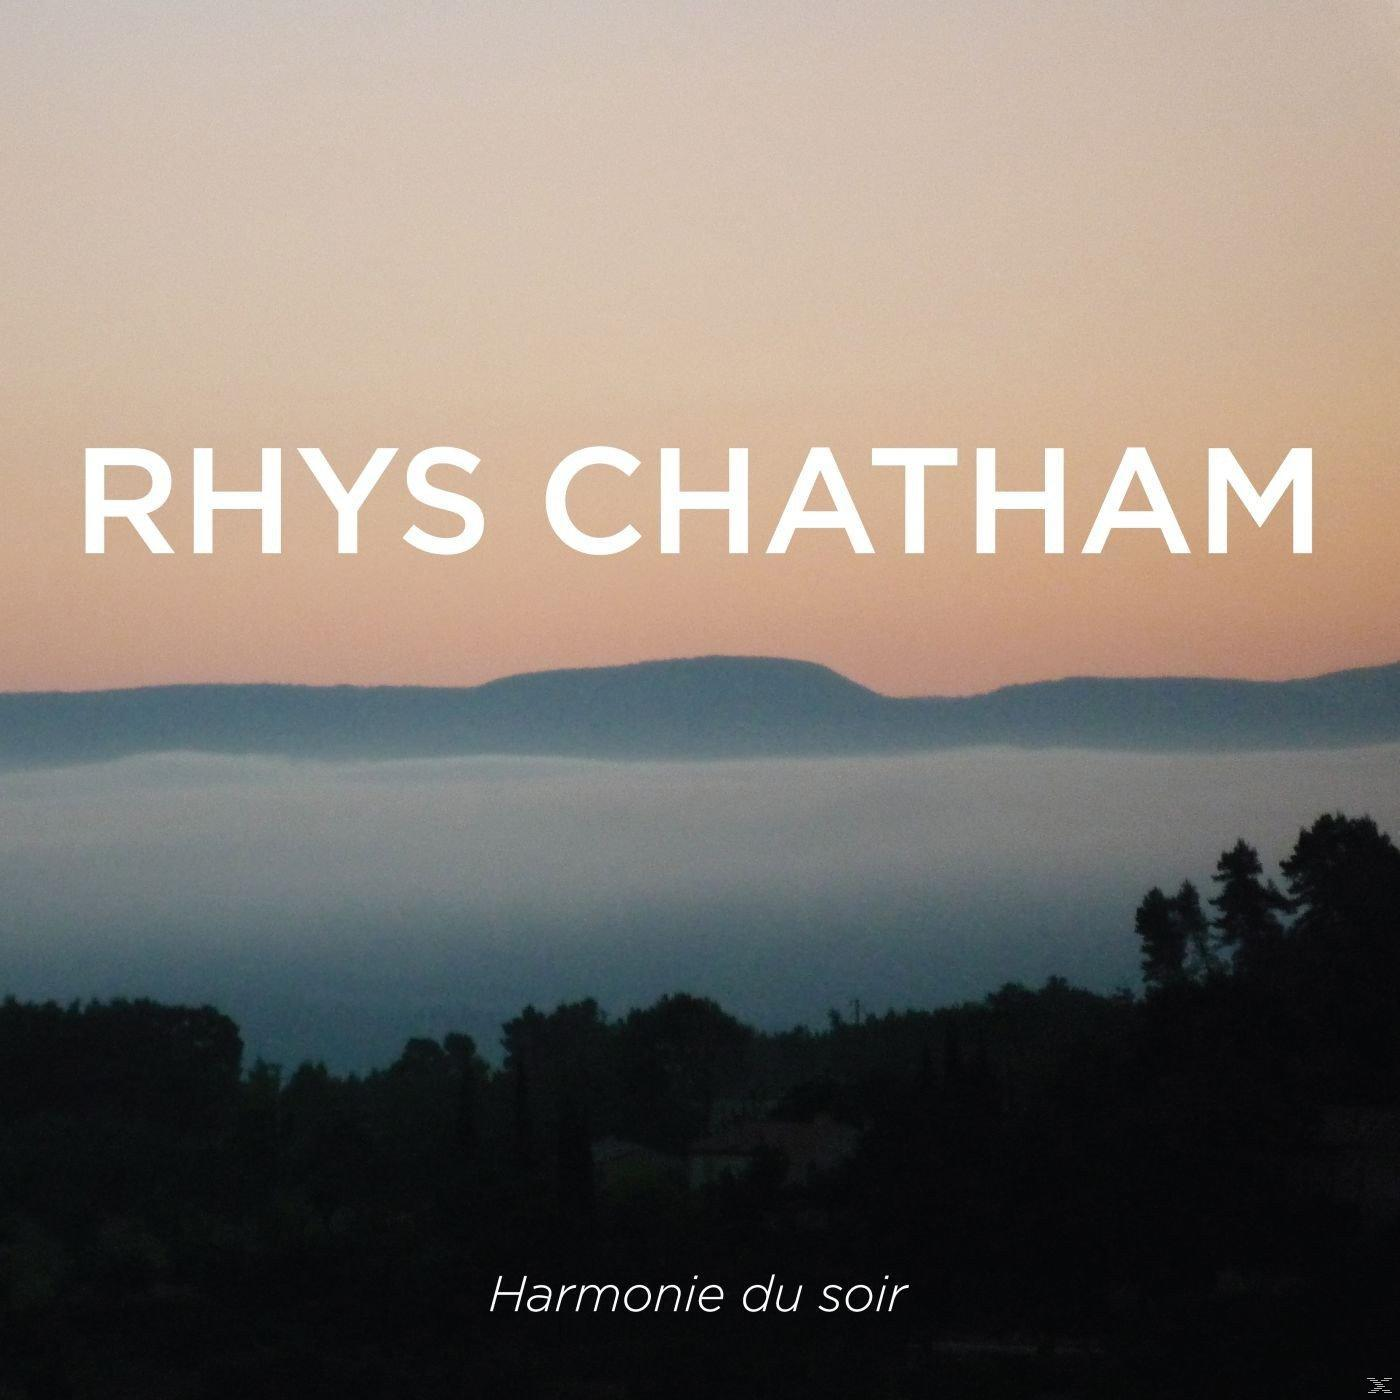 Harmonie Soir (CD) Du - Chatham Rhys -